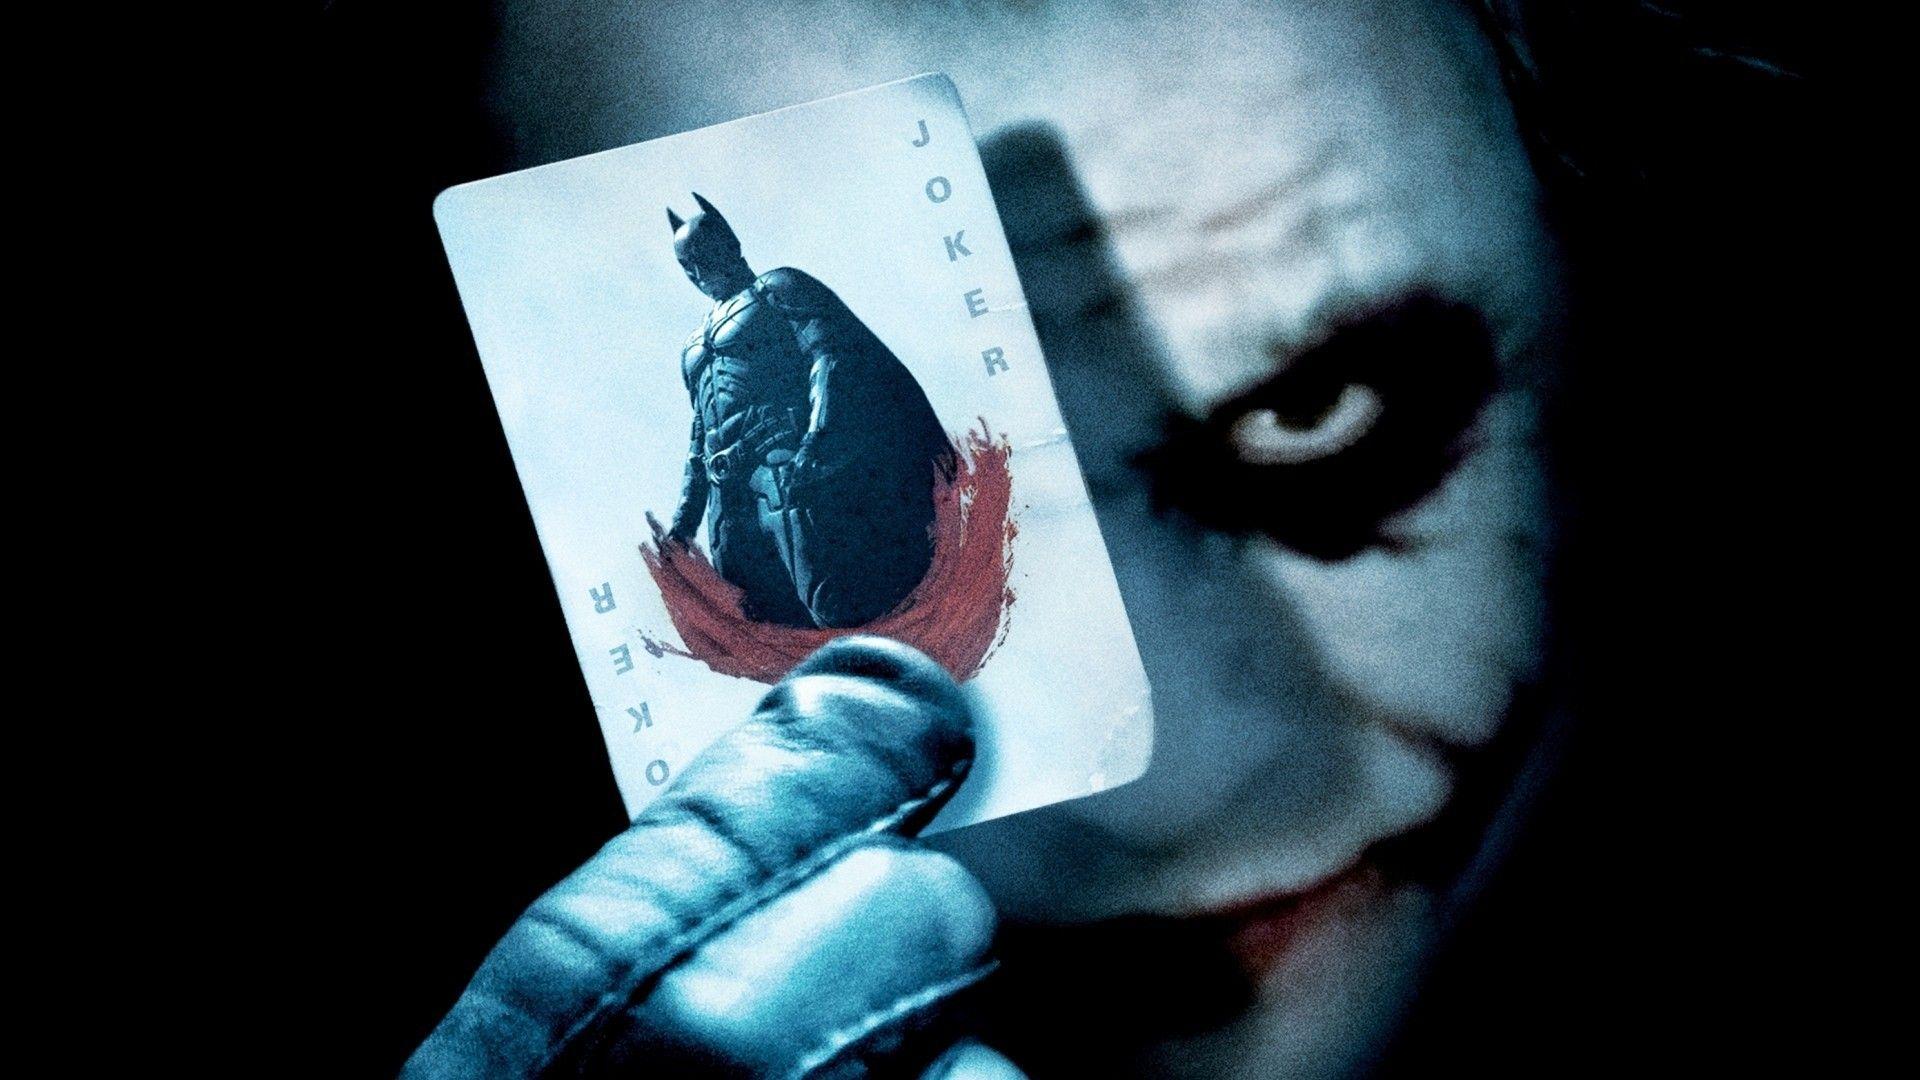 19,872 Joker Card Images, Stock Photos & Vectors | Shutterstock